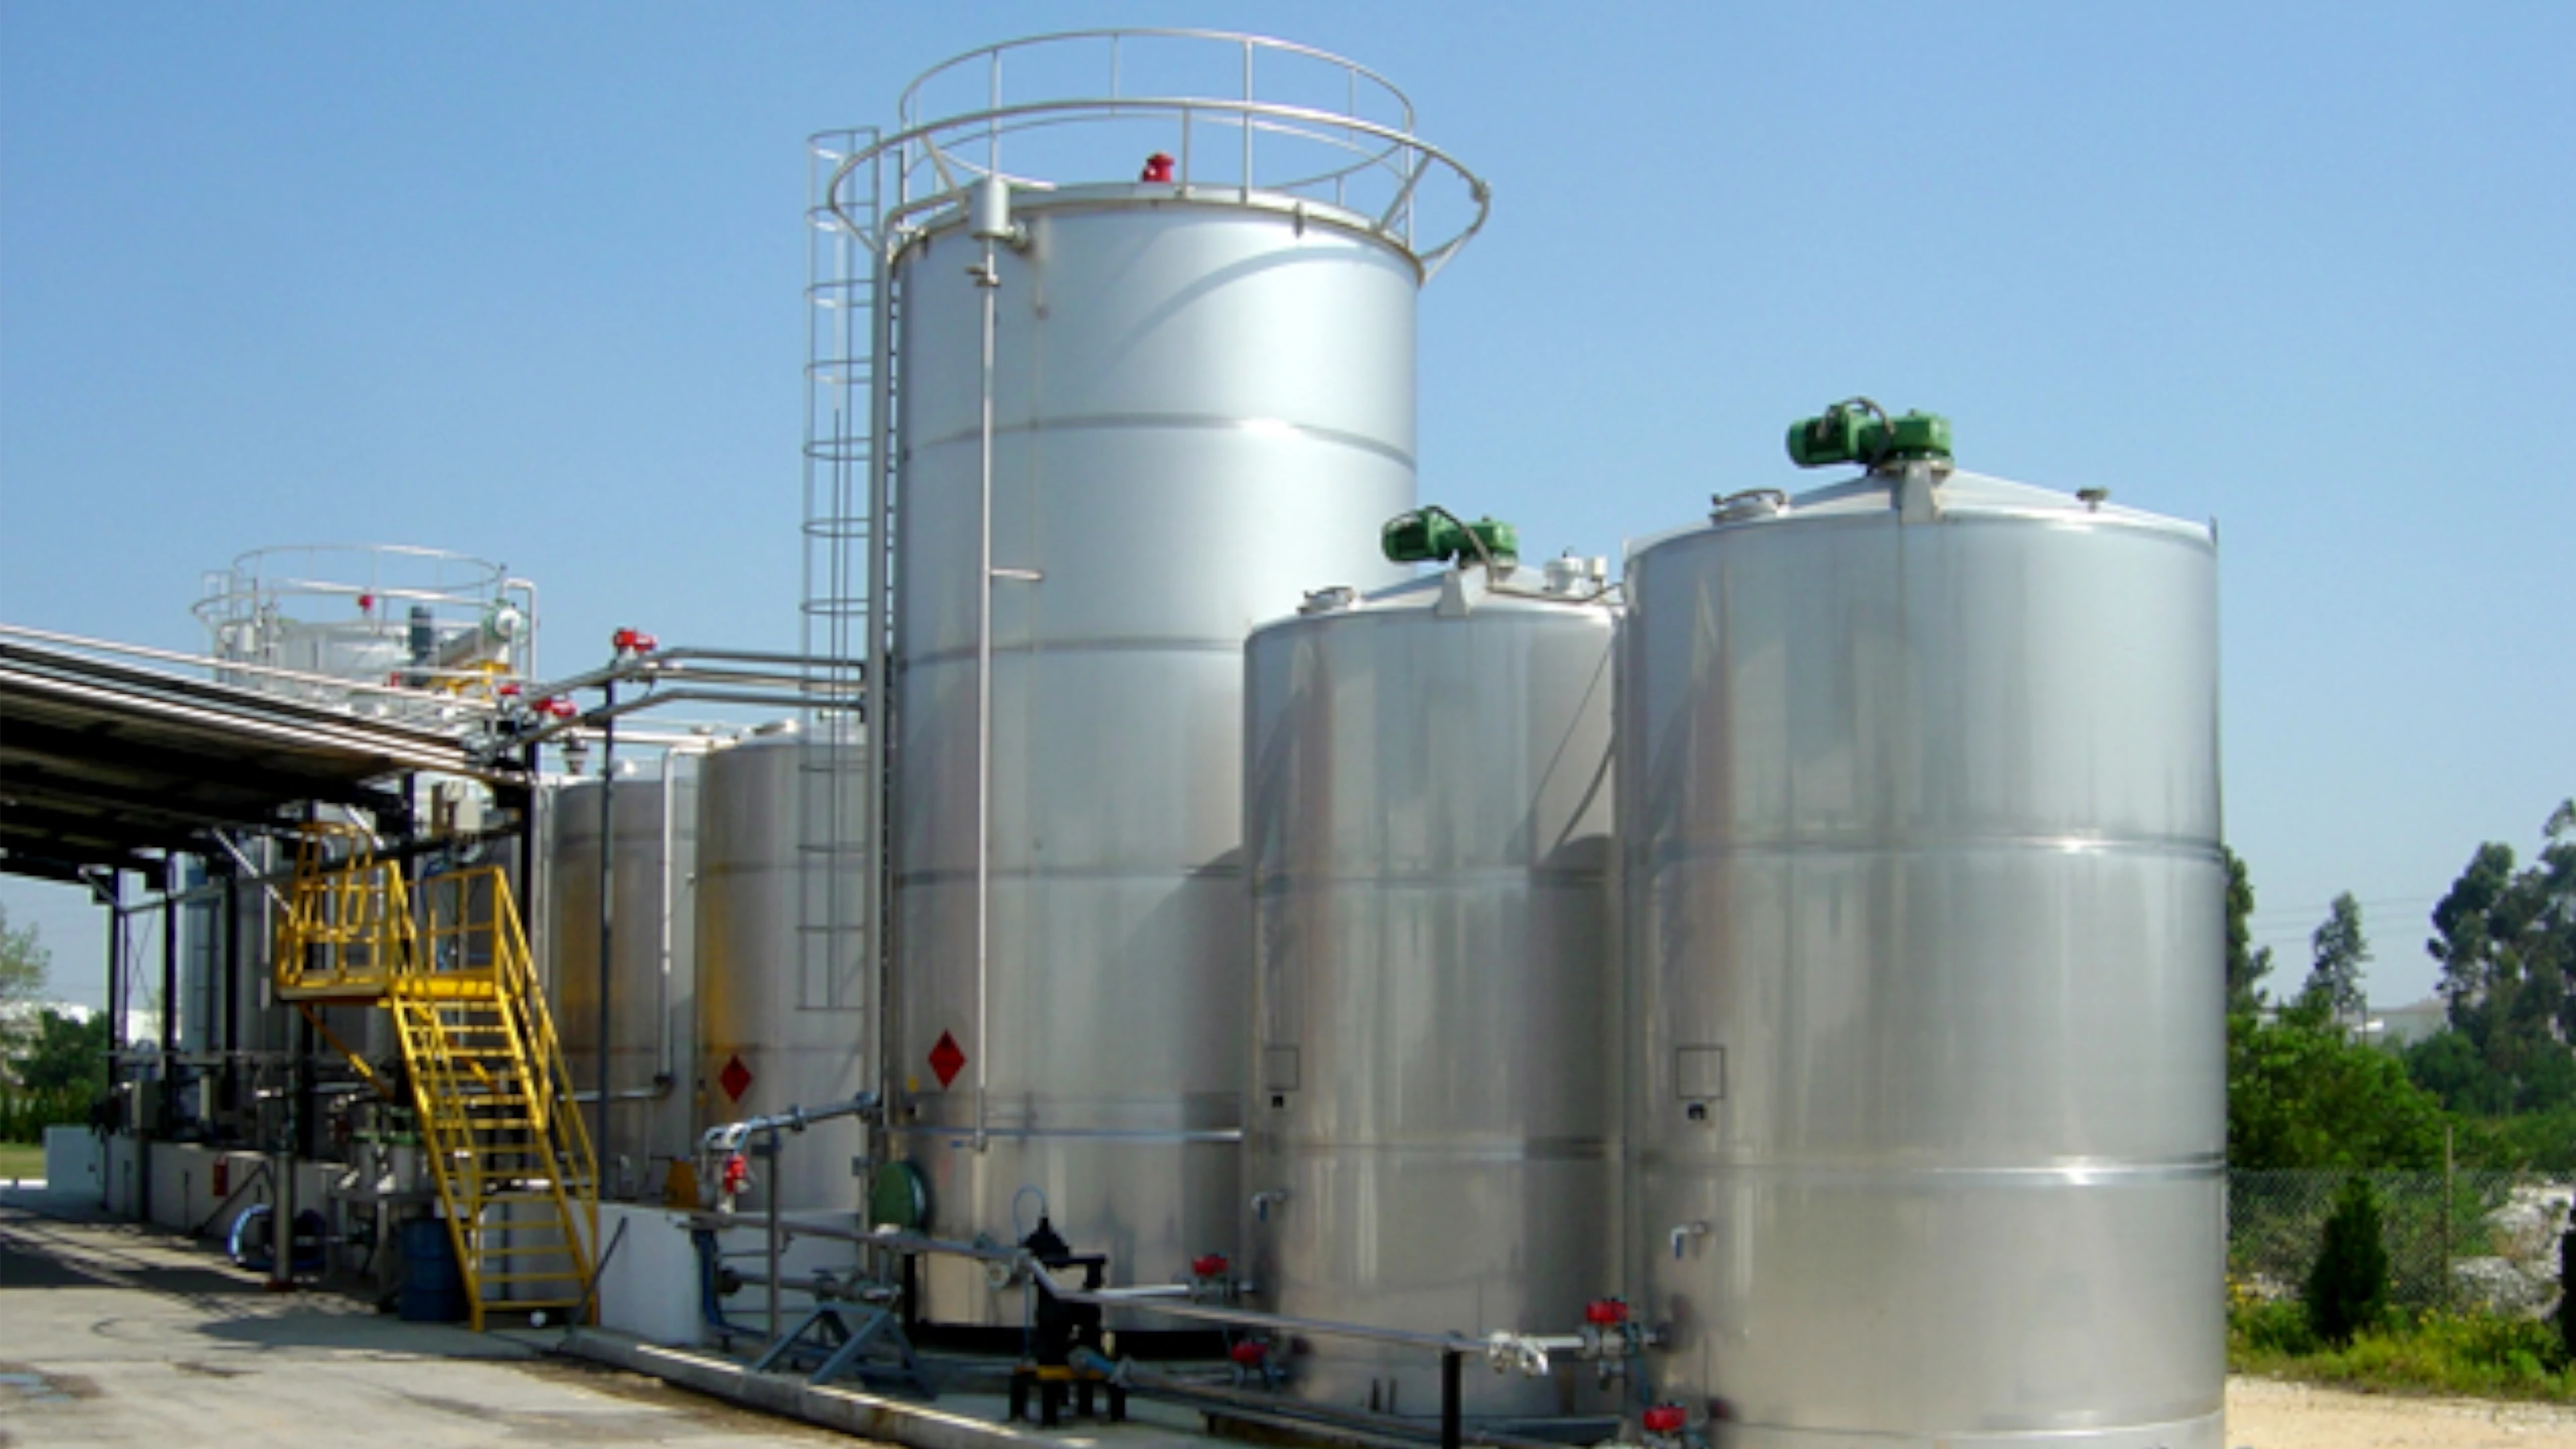 BTL Tanques em aço inoxidável - Indústria Química - Substâncias Químicas